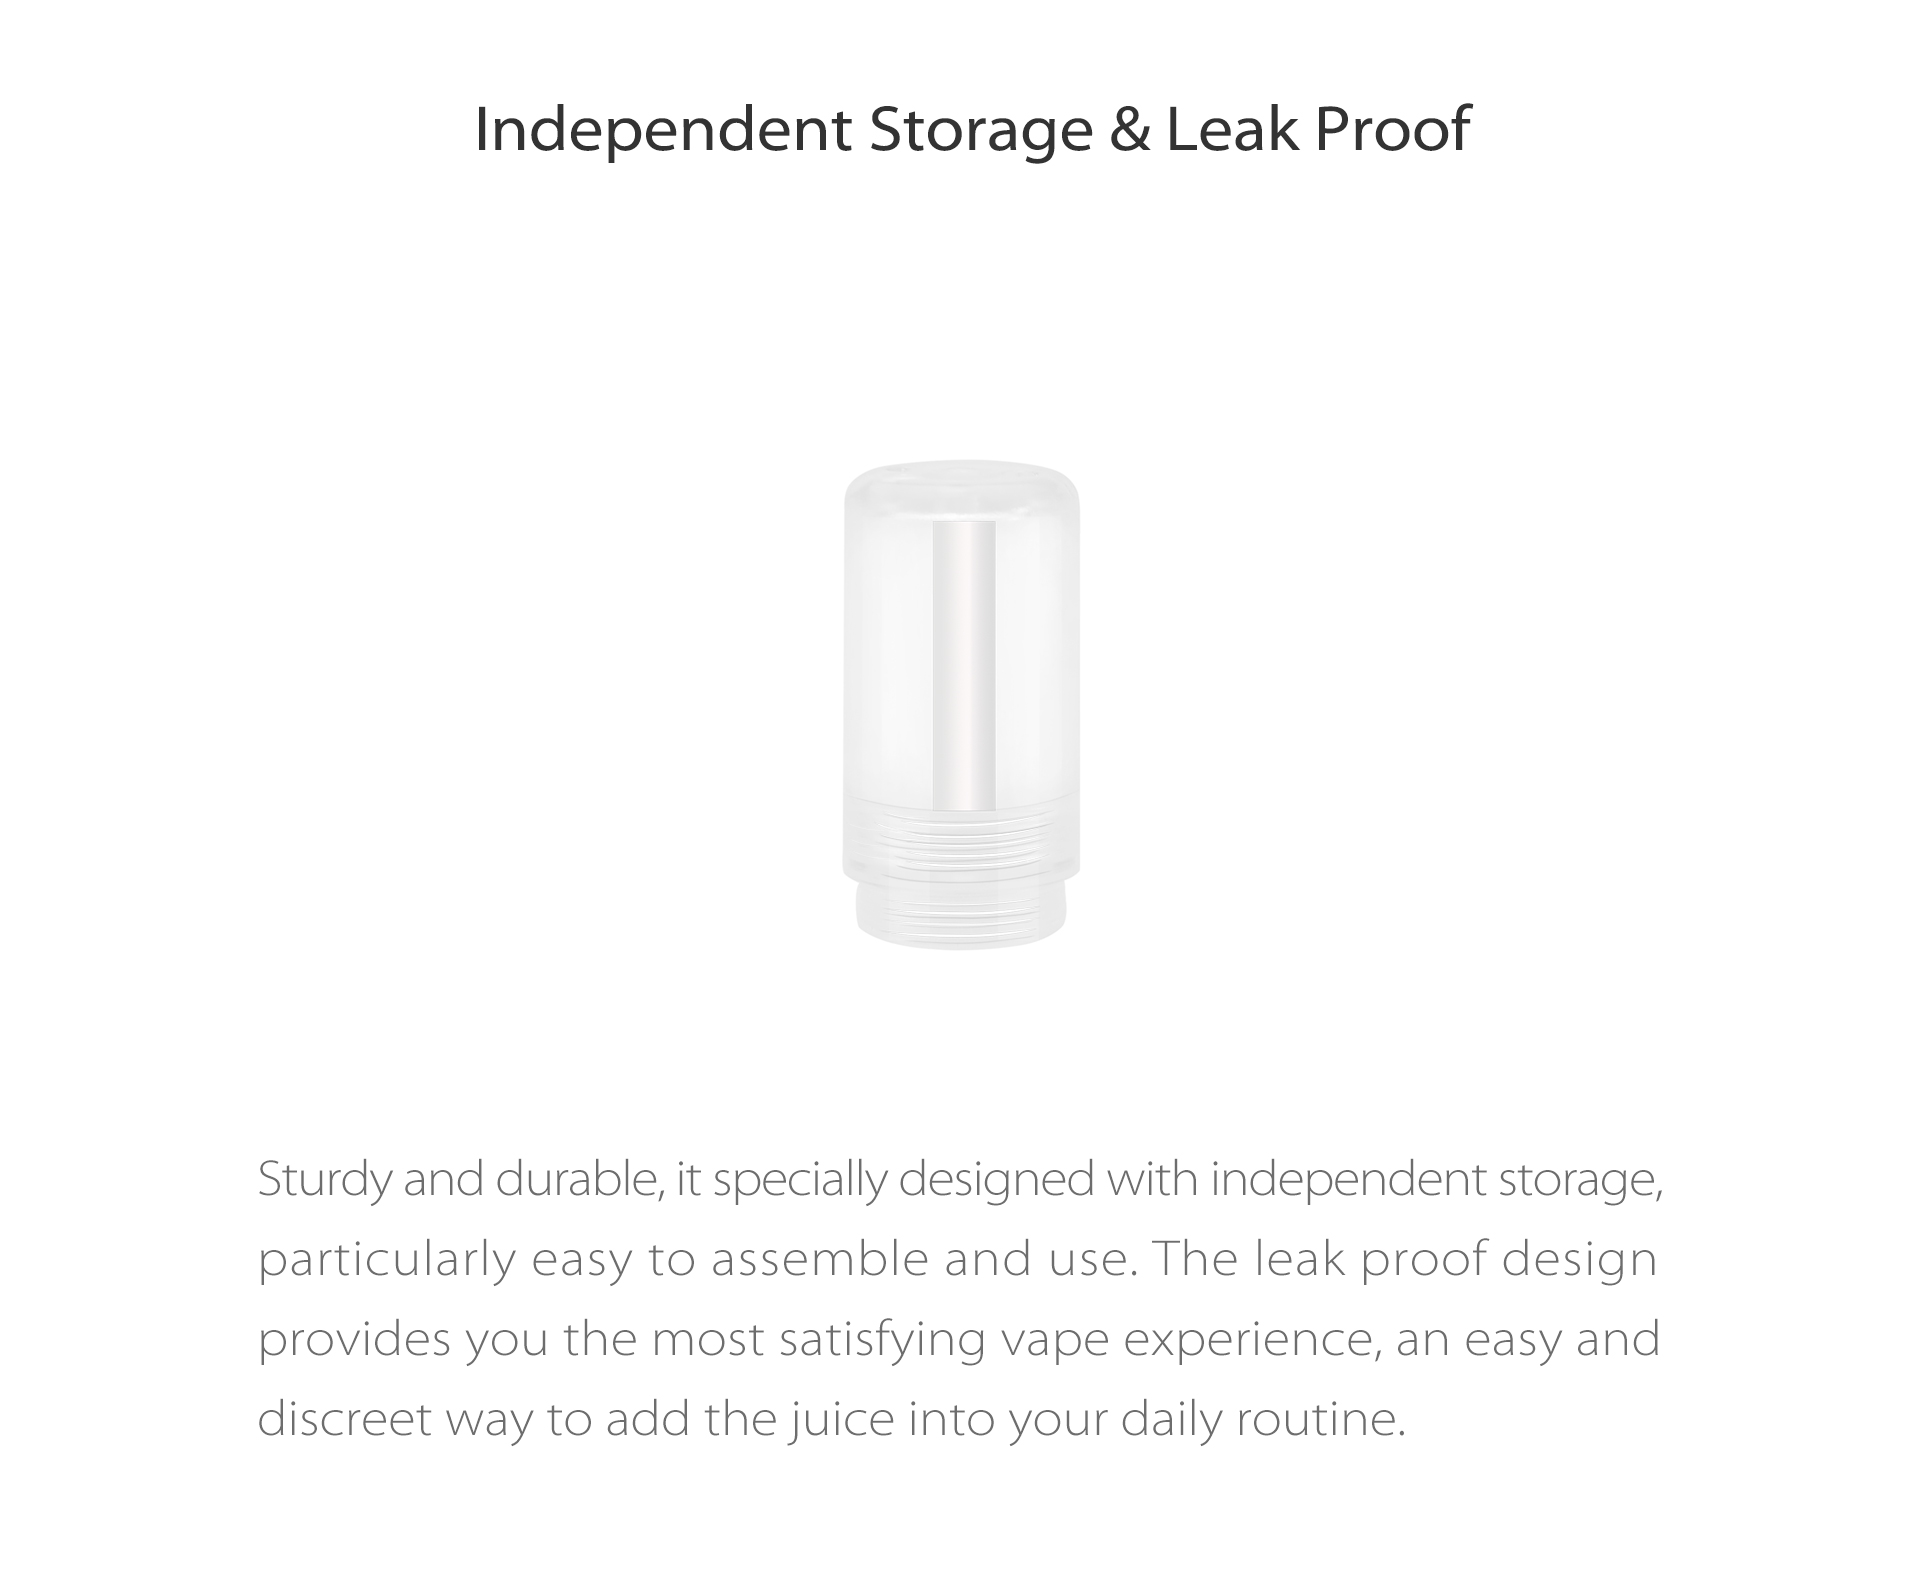 Yocan Stix leak-proof juice vape pen features indendent storage & leak proof.